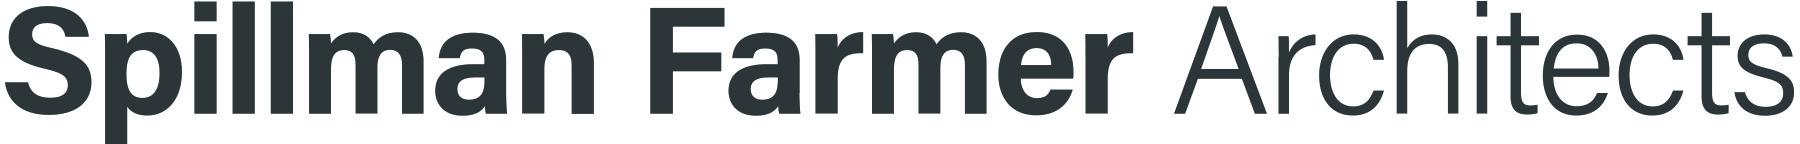 Spillman Farmer Architects logo